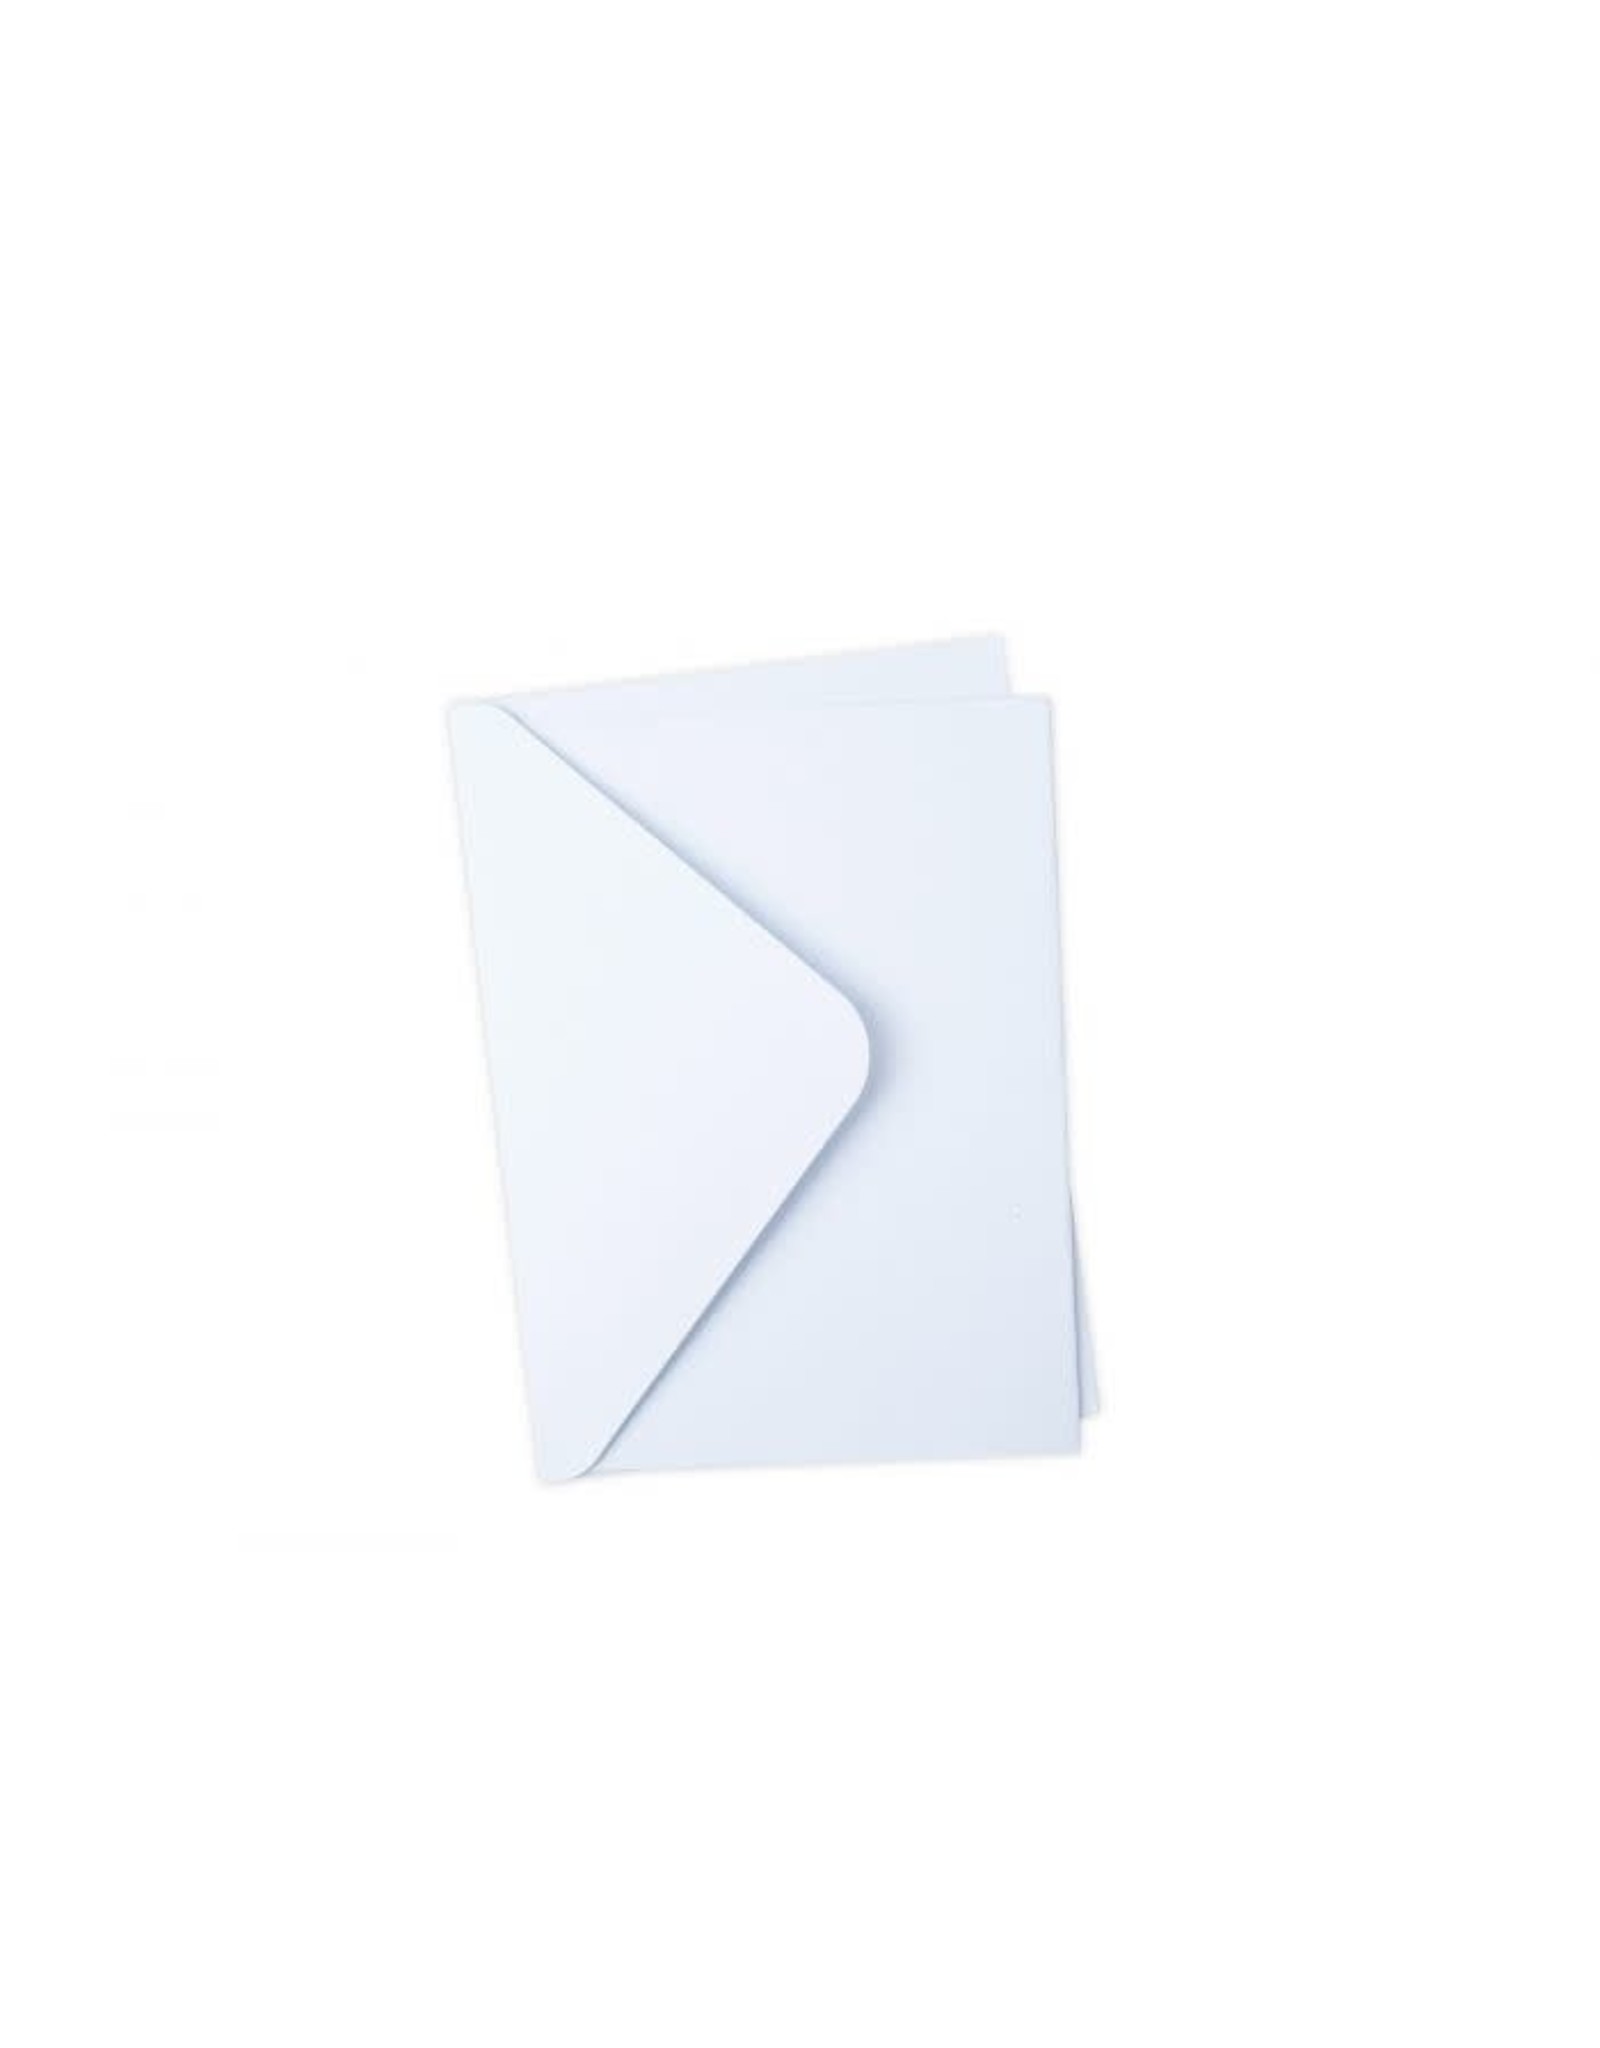 Sizzix Surfacez Cards & Envelopes, A6, White, 10PK